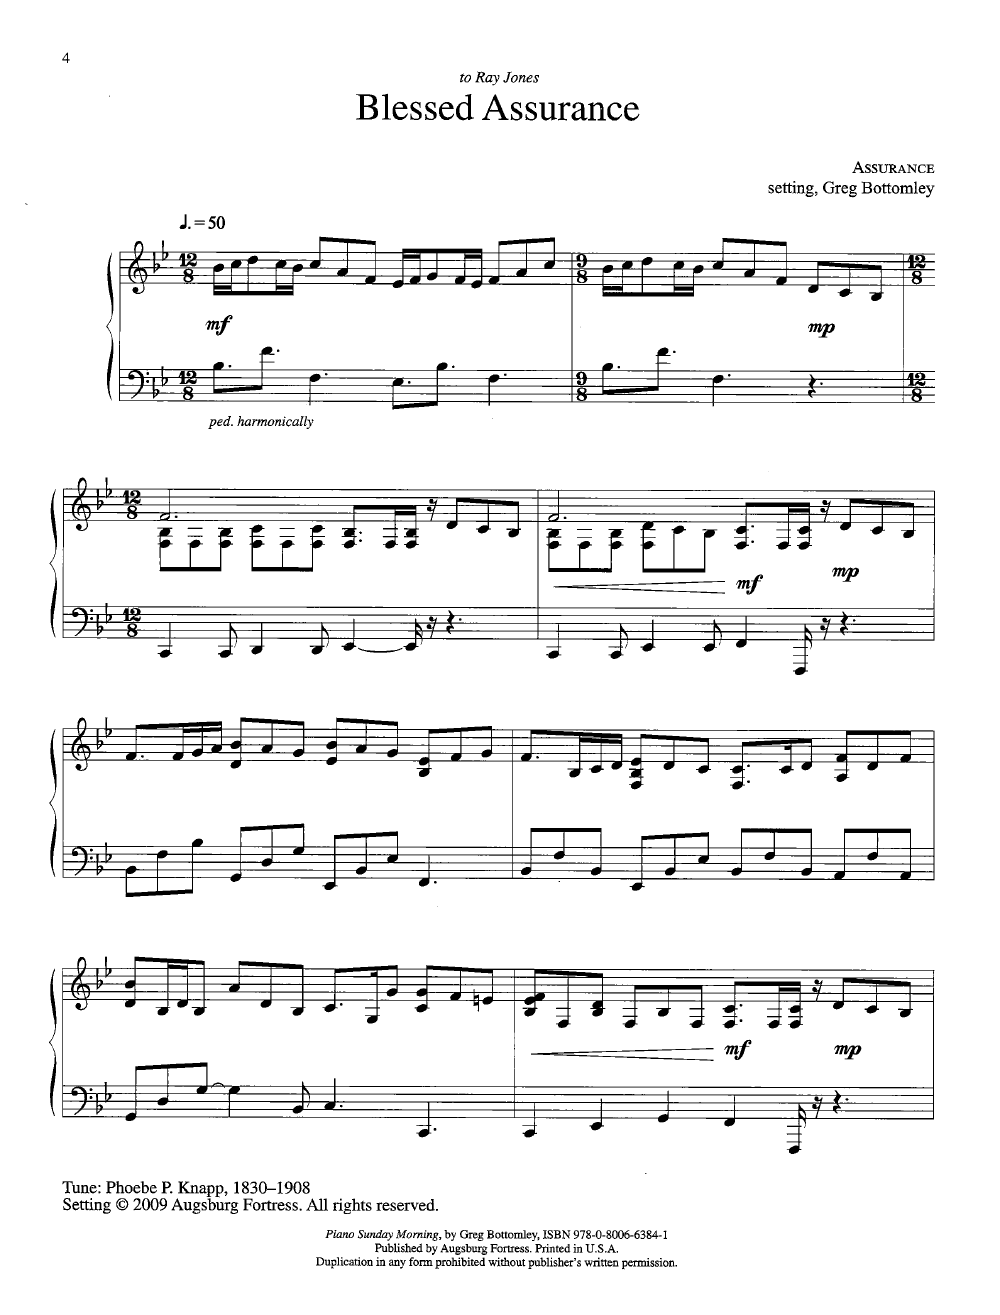 Piano Sunday Morning (Piano) arr. Greg Bottomley| J.W. Pepper Sheet Music